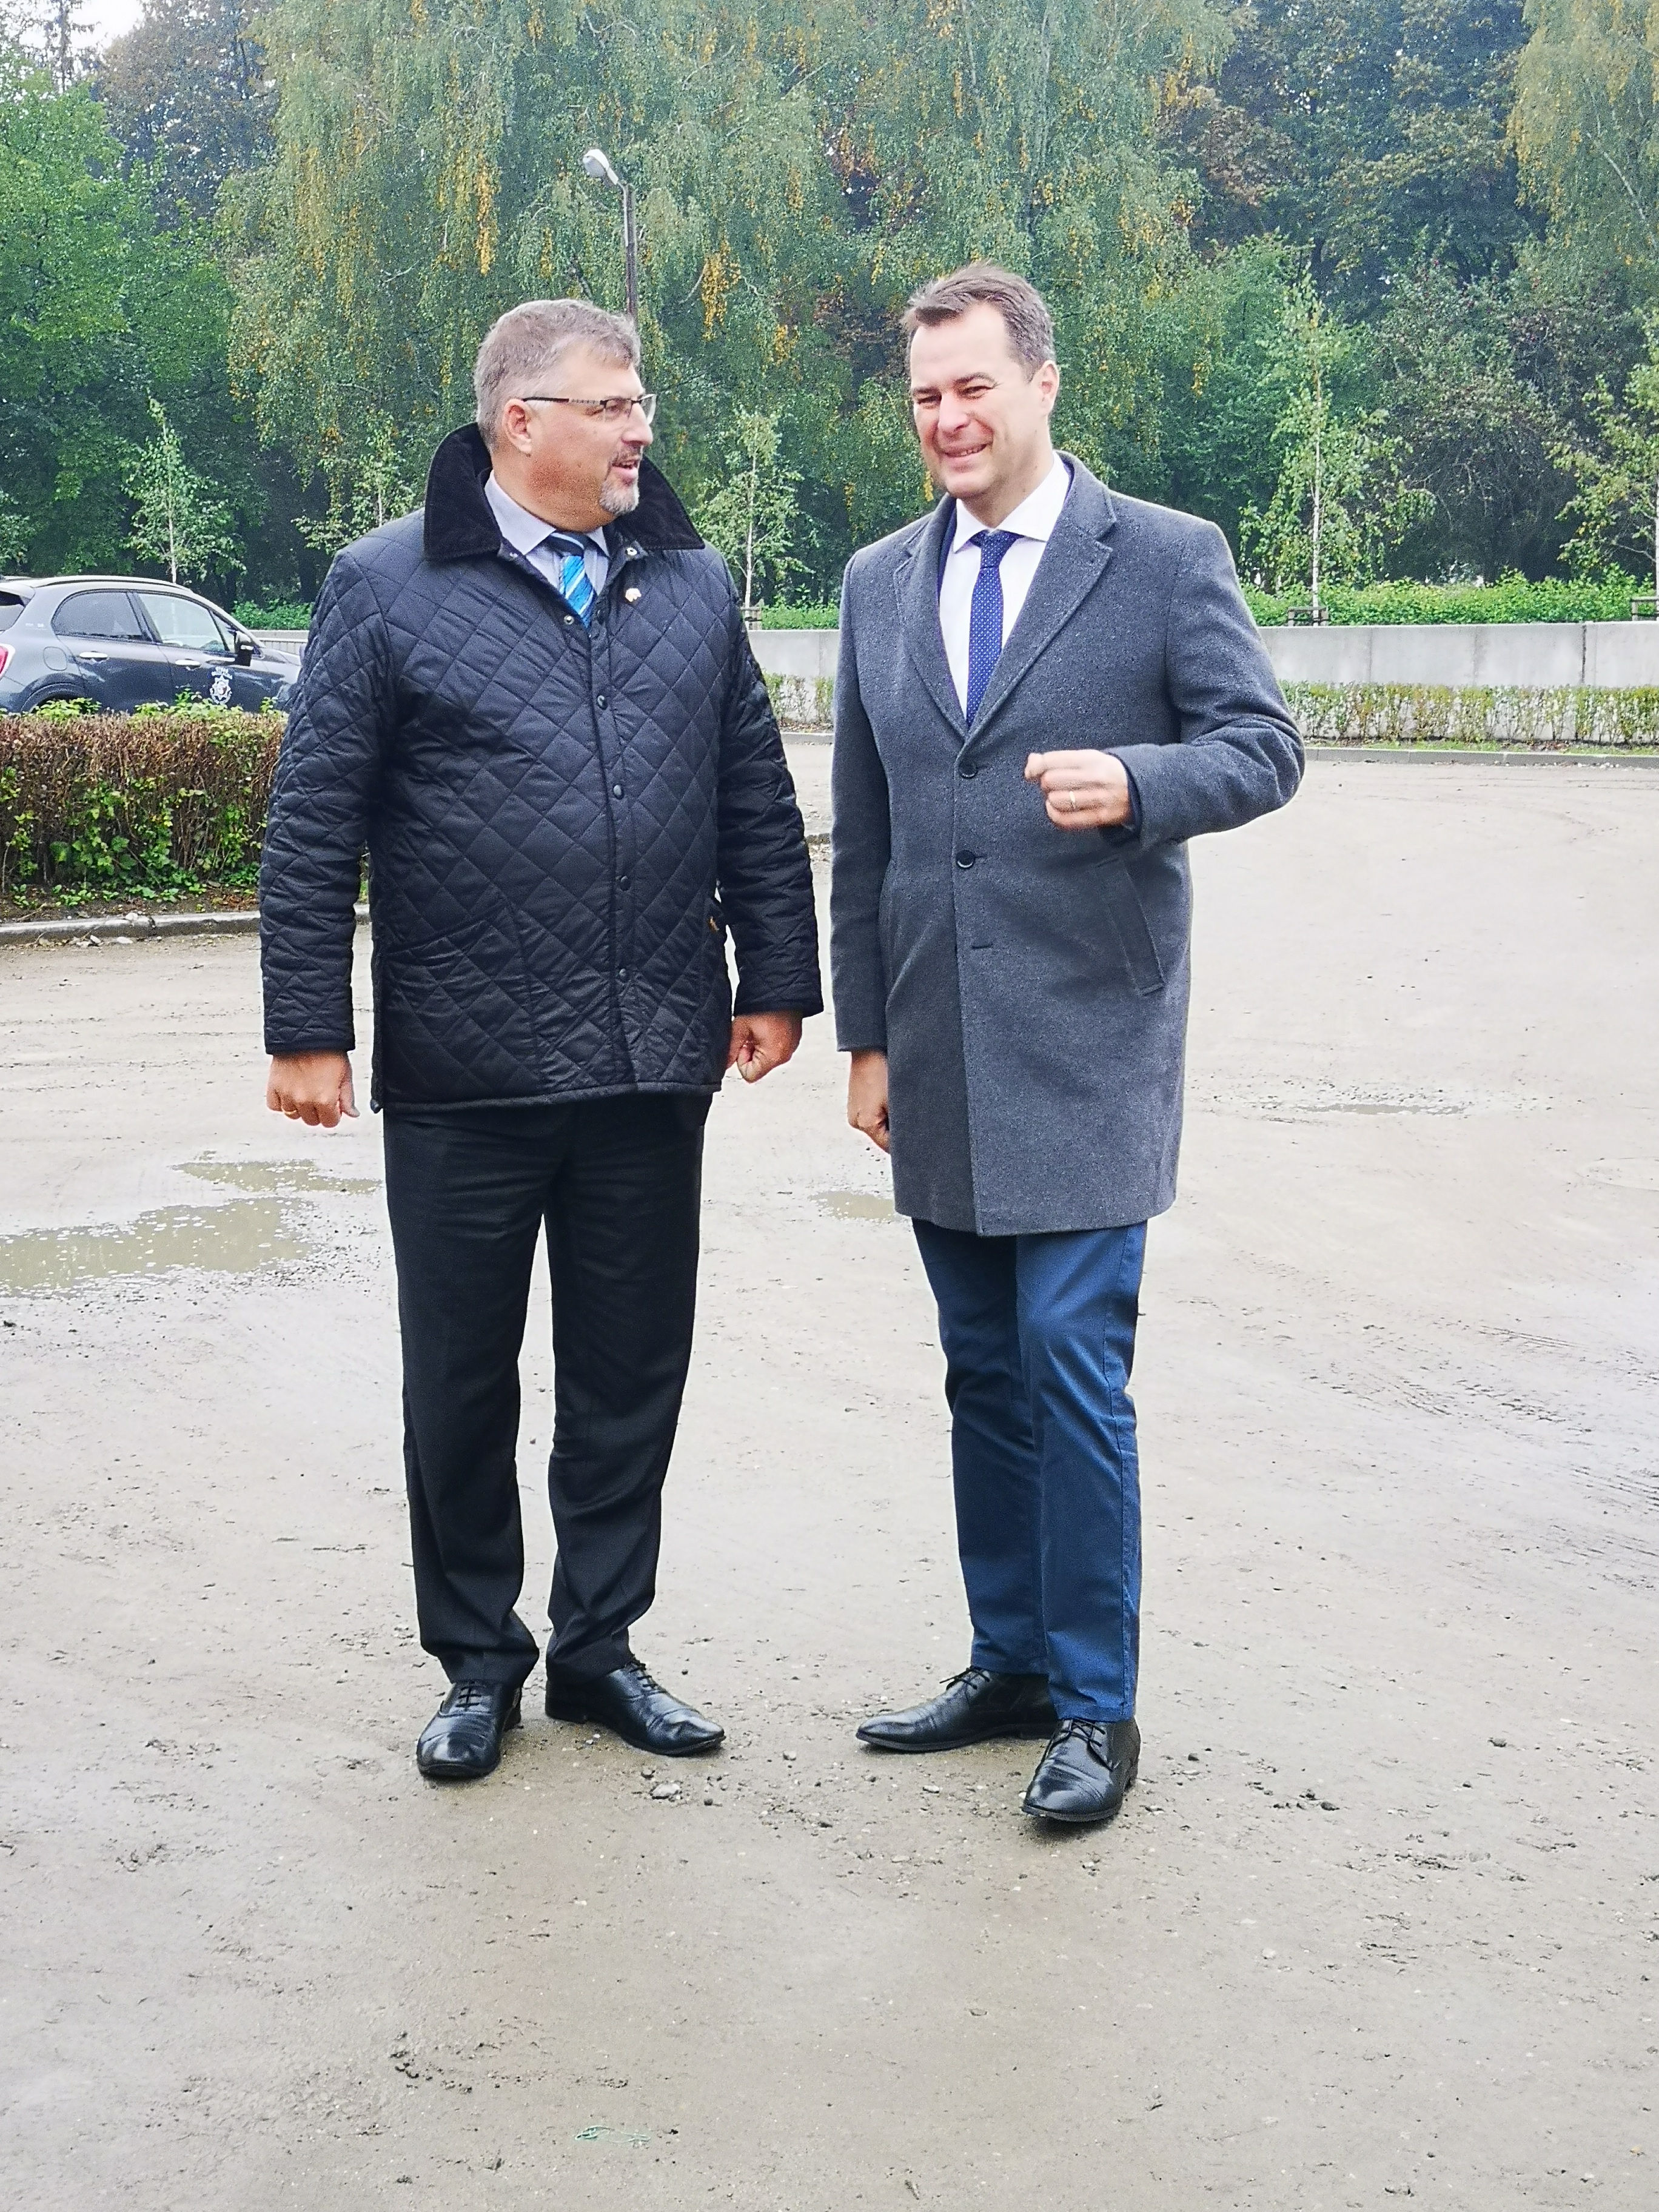 Andrzej Skrzypiński als Landrat im Partnerlandkreis Oświęcim im Amt bestätigt 